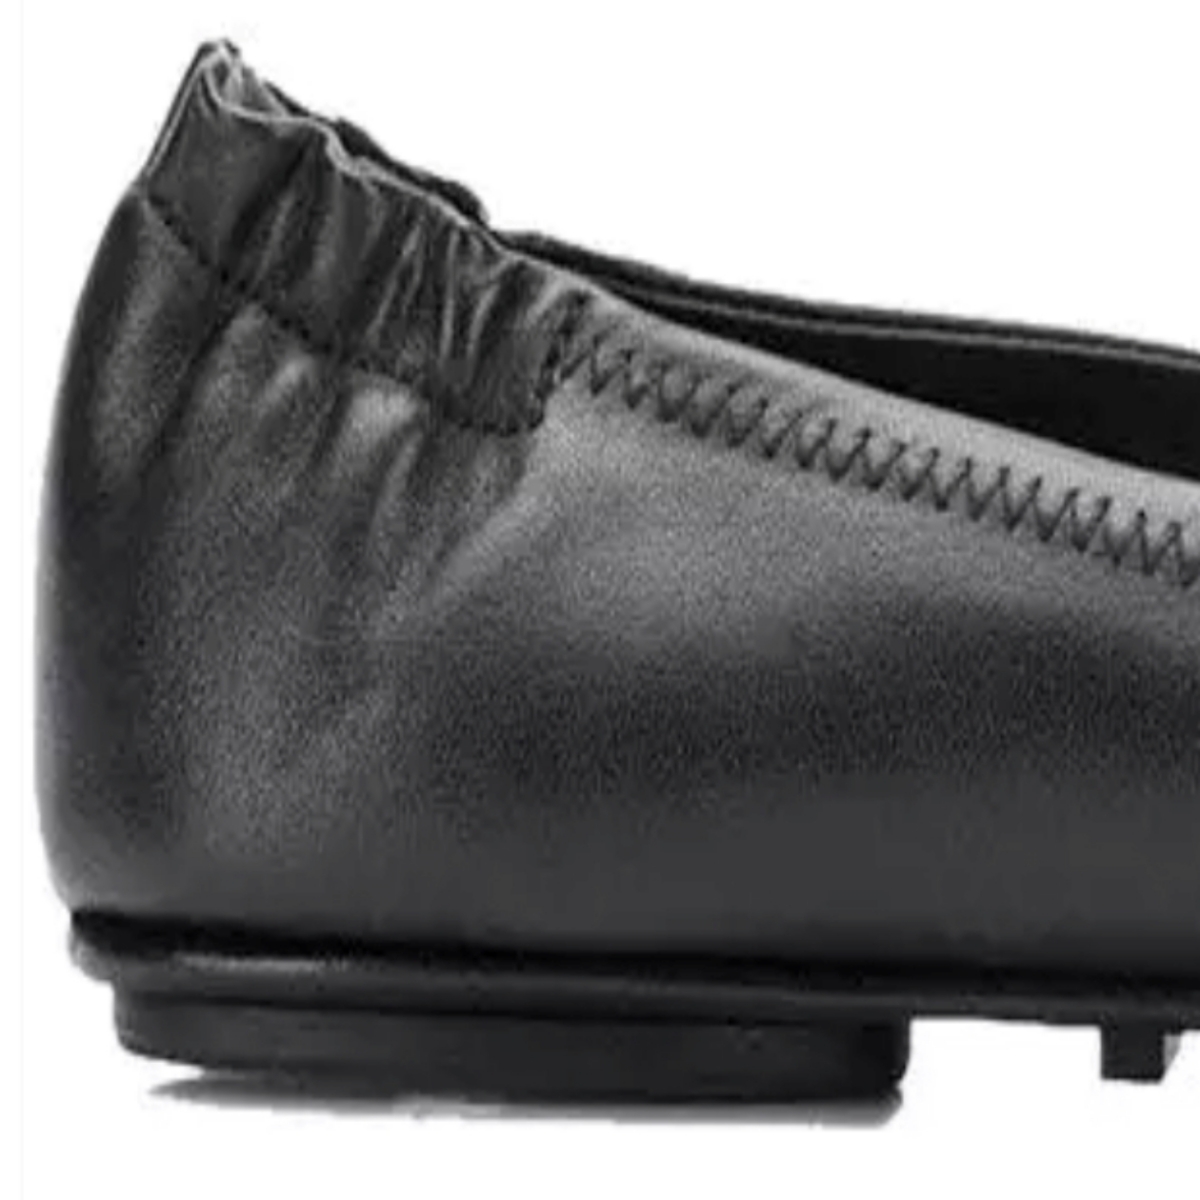 Nappa leather yang digunakan membuat Tory Burch flat shoes